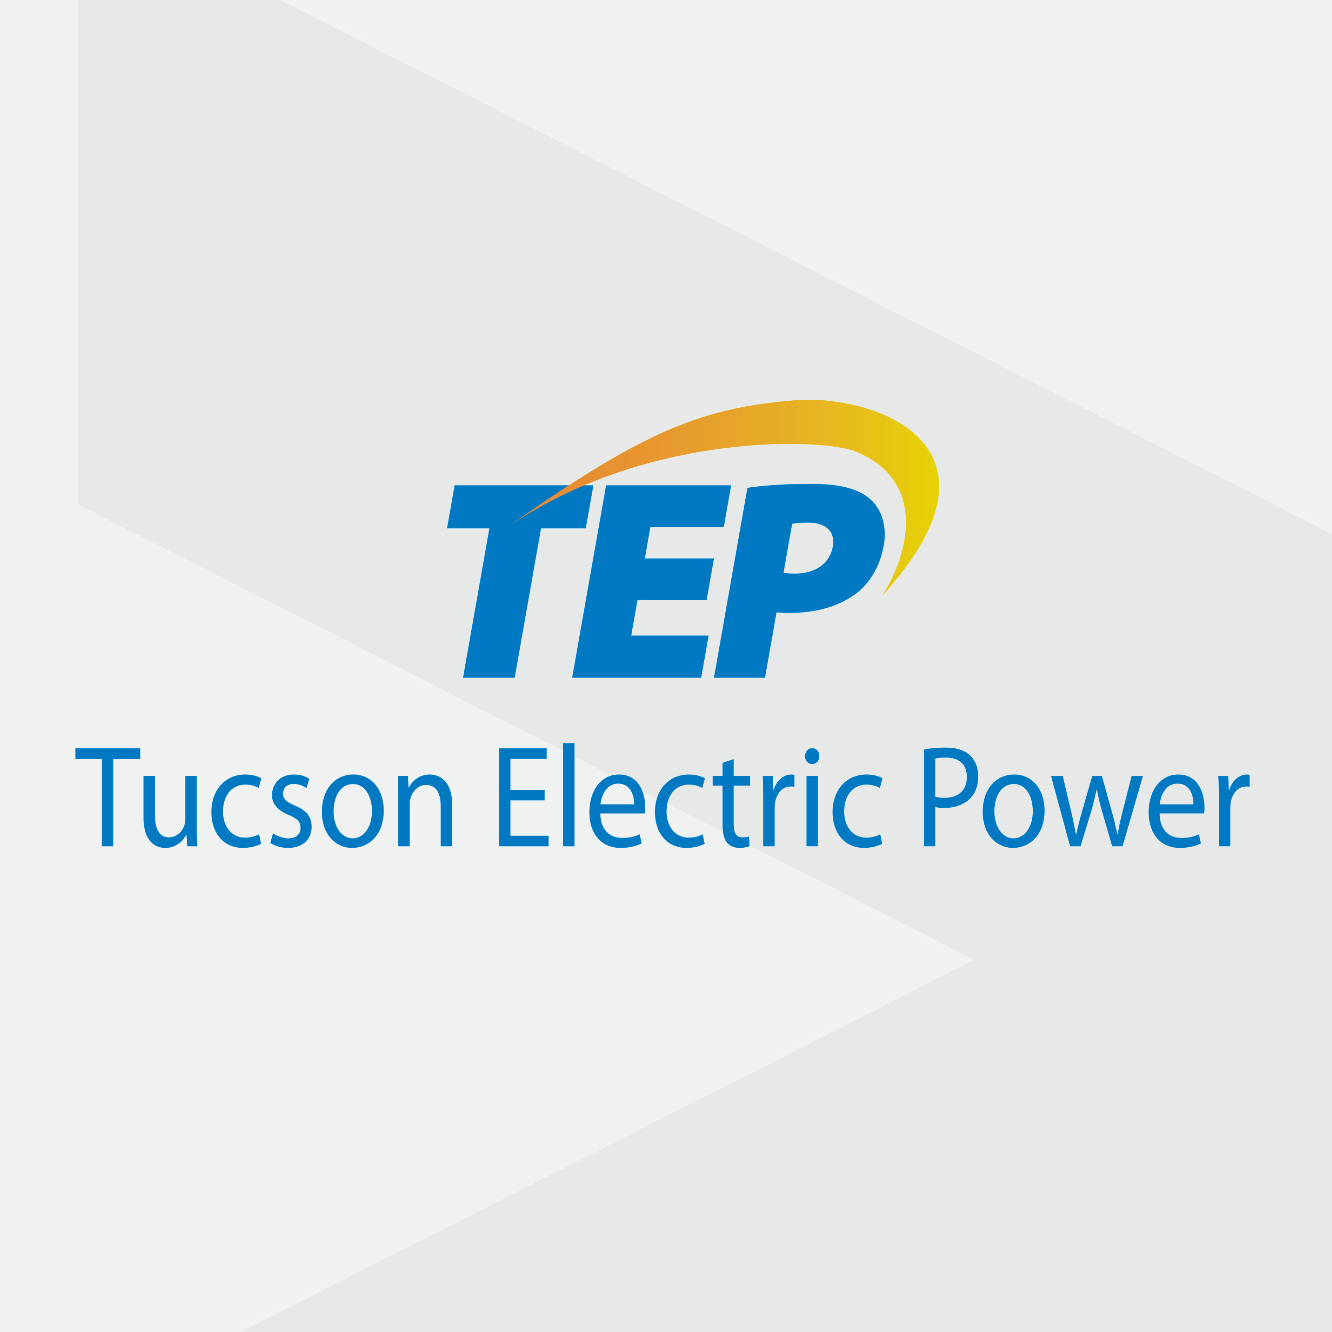 Tucson Electric Power case study